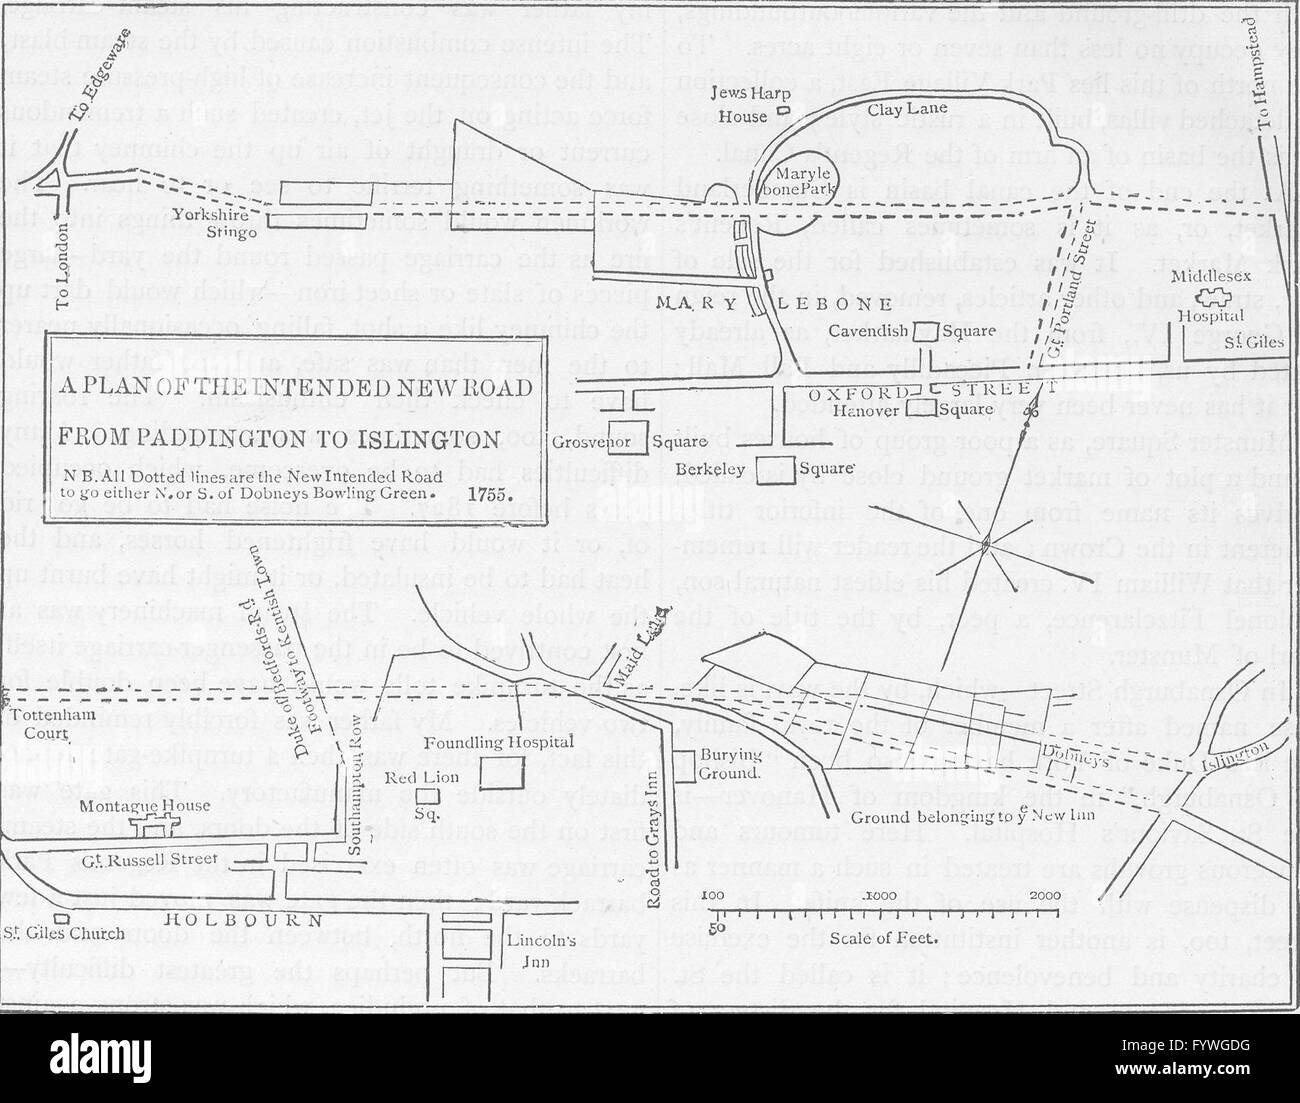 MARYLEBONE/EUSTON ROAD neuen Routenplan. Islington zur Edgware Road (1755), c1880 Karte Stockfoto